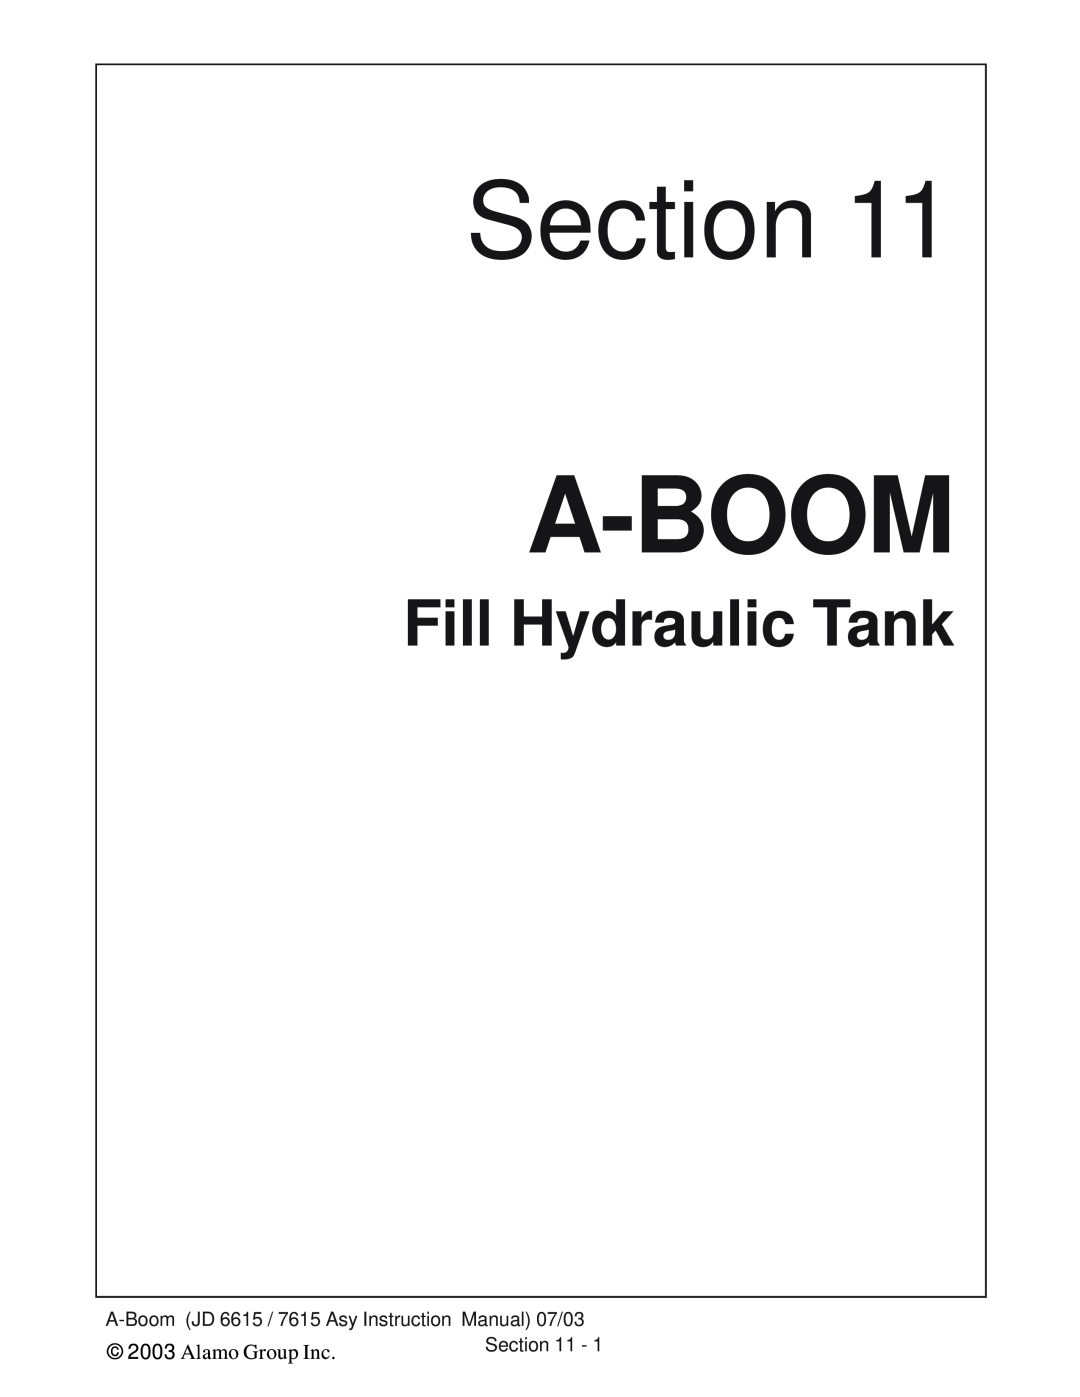 Alamo DSEB-D16/SAS instruction manual Fill Hydraulic Tank, Section, A-Boom, Alamo Group Inc 